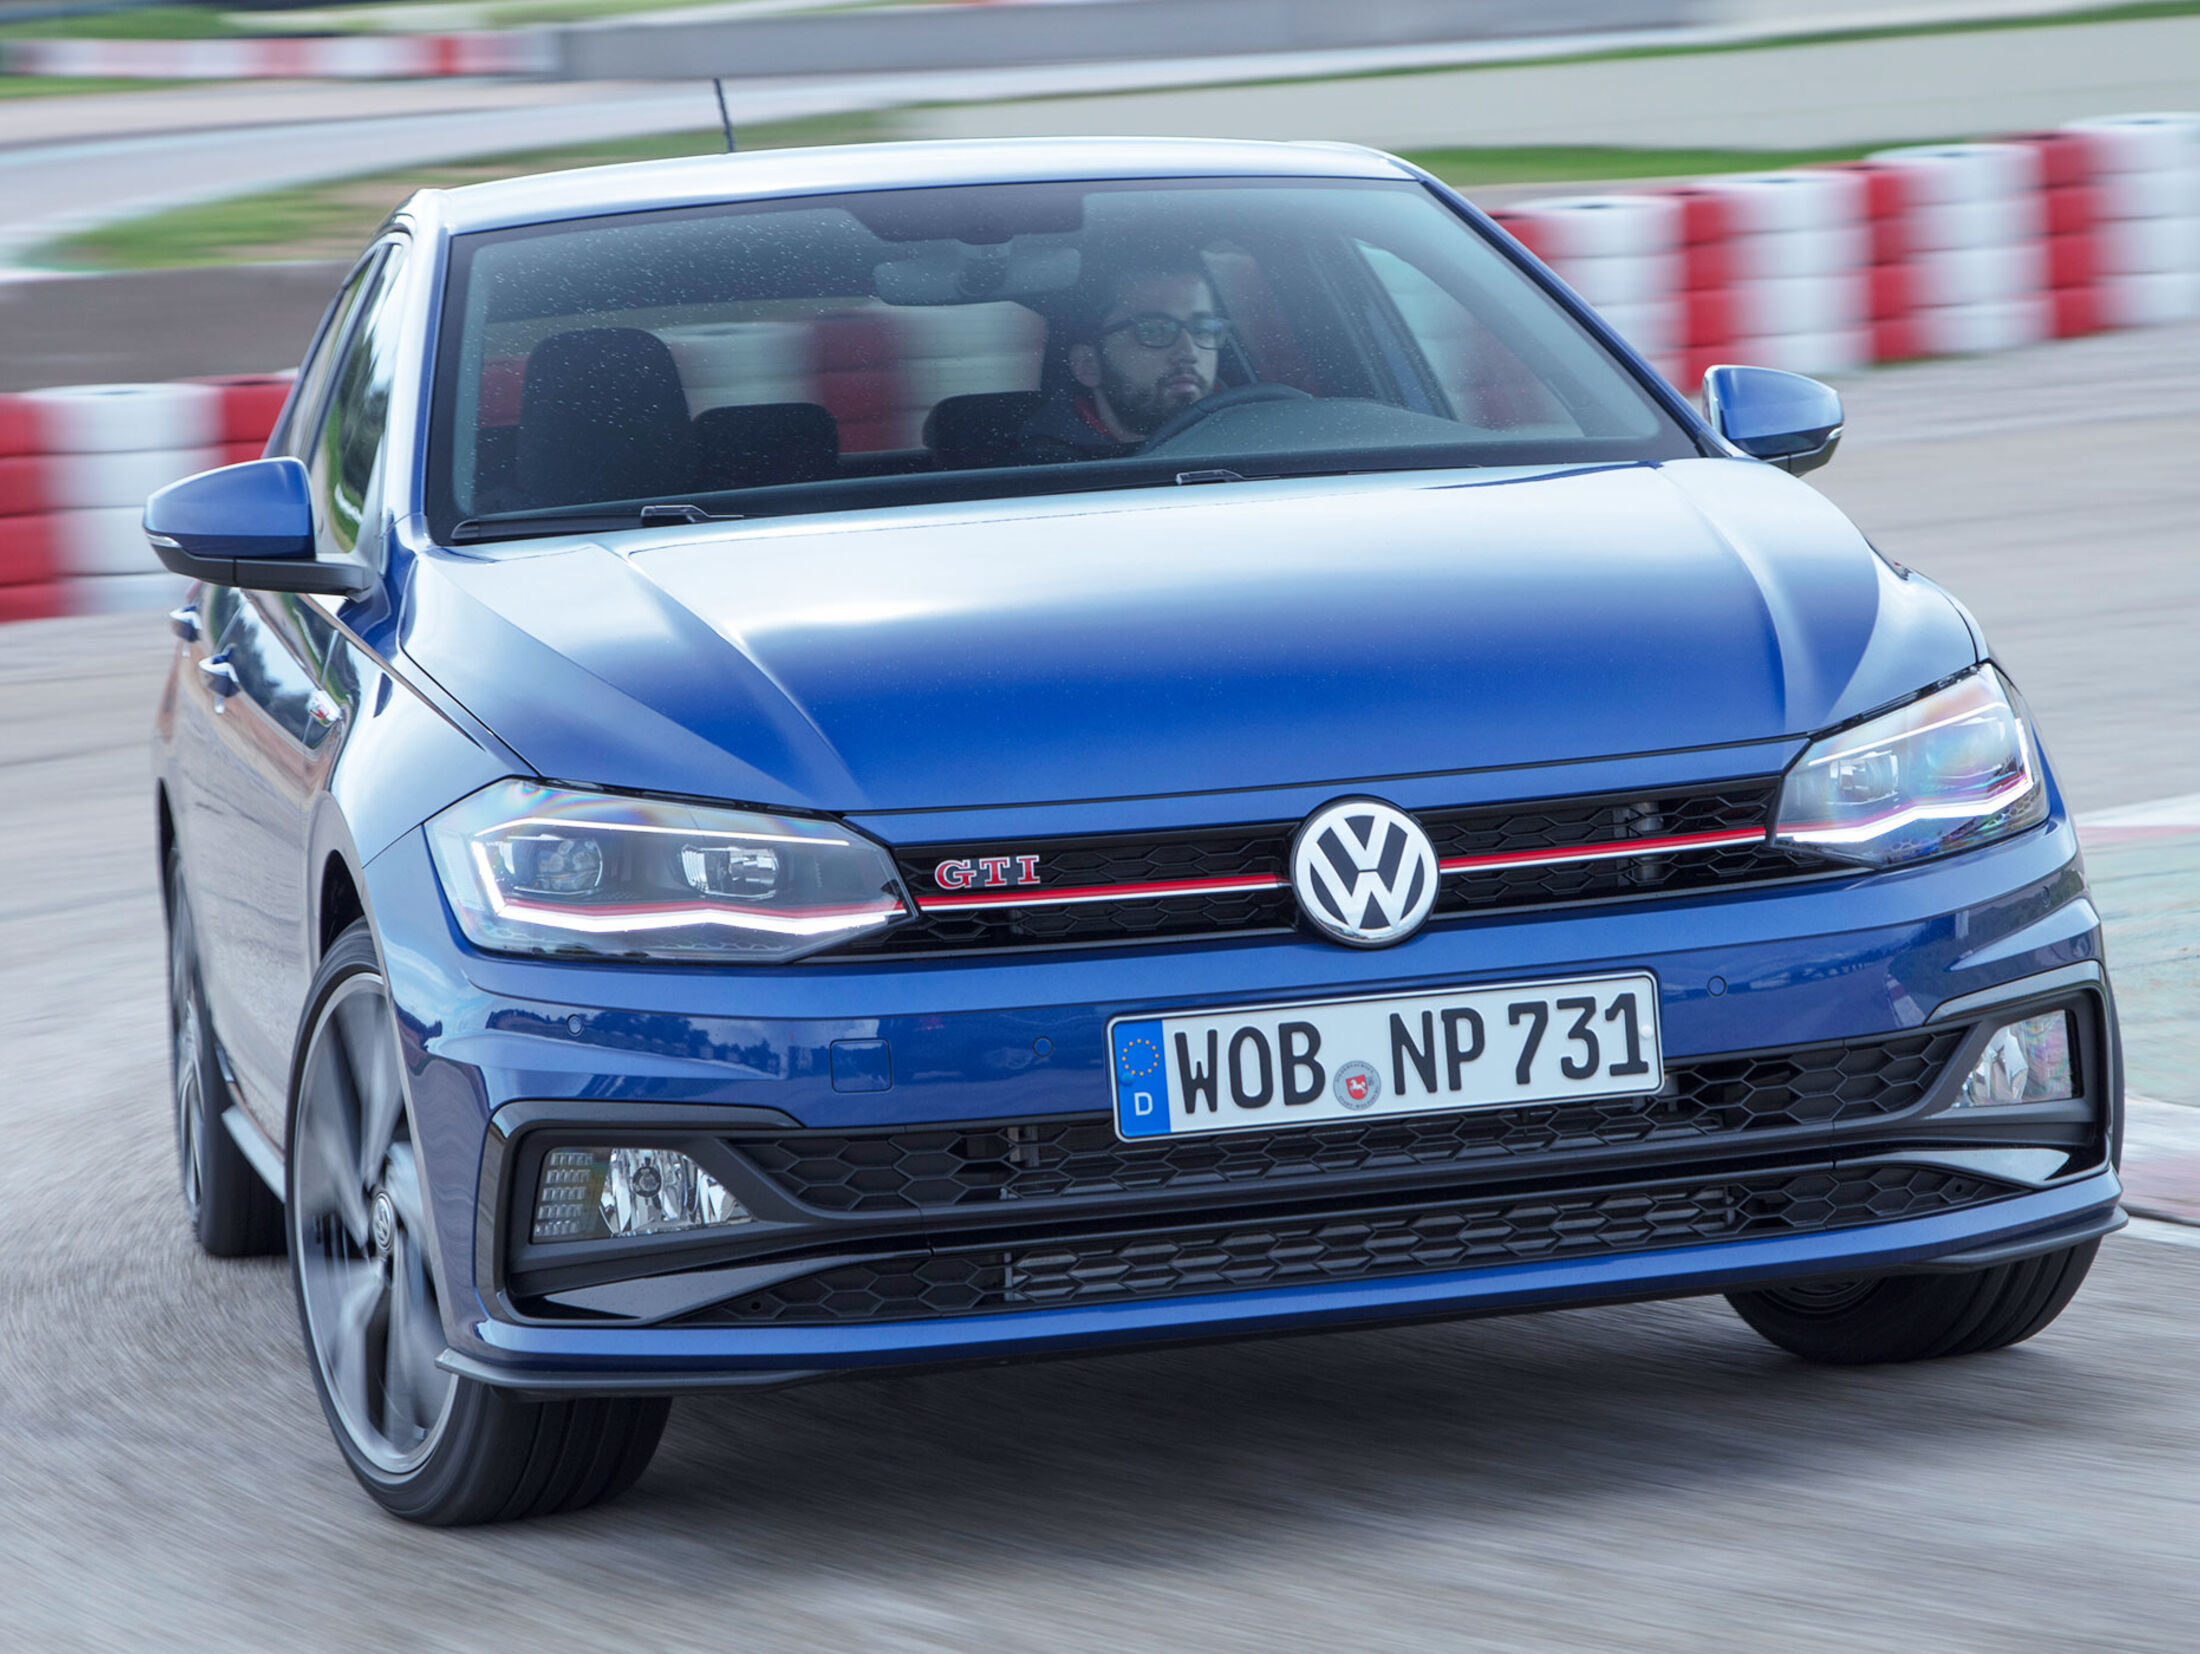 https://imgr1.auto-motor-und-sport.de/VW-Polo-VI-GTI-2018-AW-2G-blau-dynamisch-Front-jsonLd4x3-22743b51-1136107.jpg